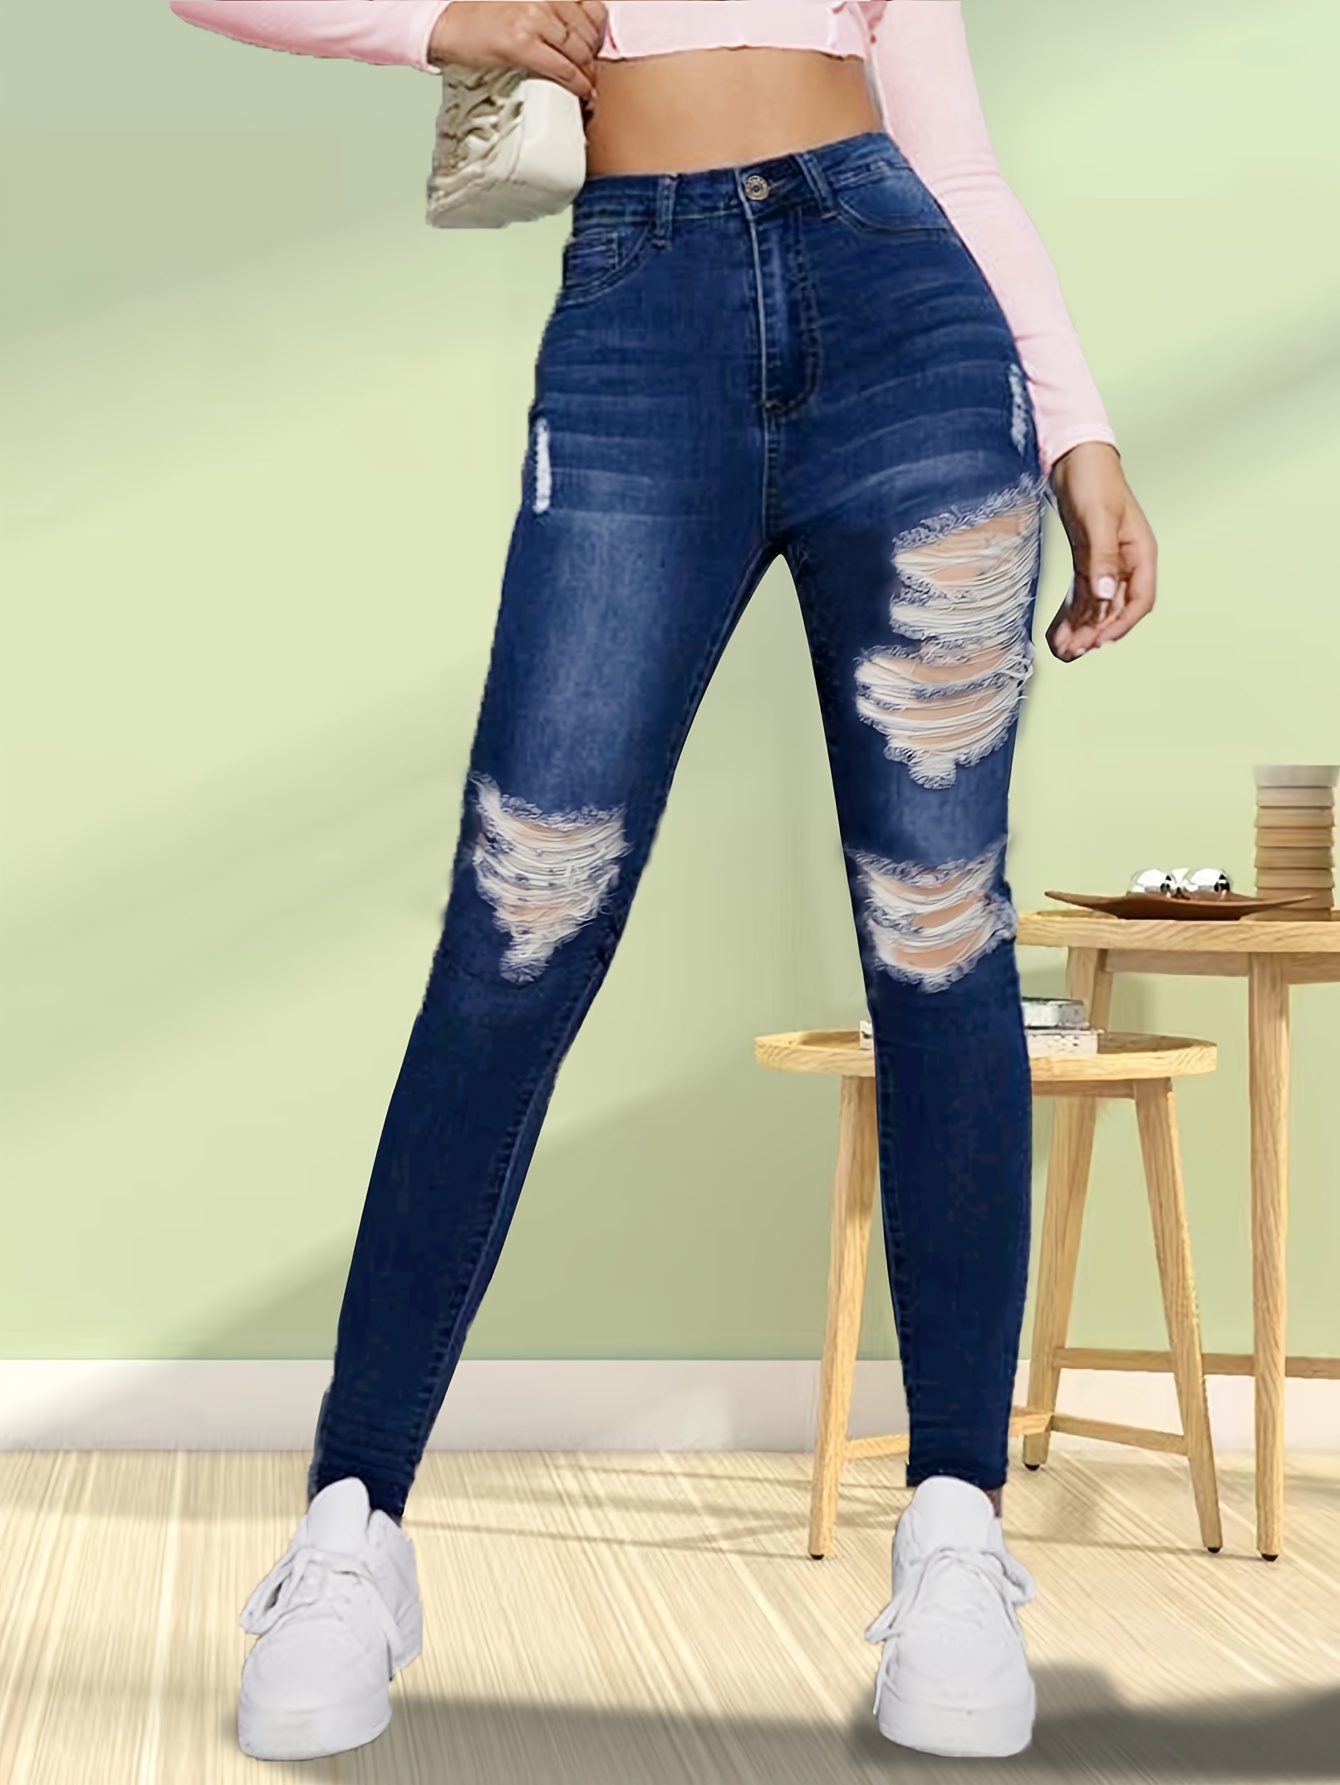 Black Ripped Holes Skinny Jeans, Slim Fit High-Stretch Slant Pockets  Versatile Tight Jeans, Women's Denim Jeans & Clothing